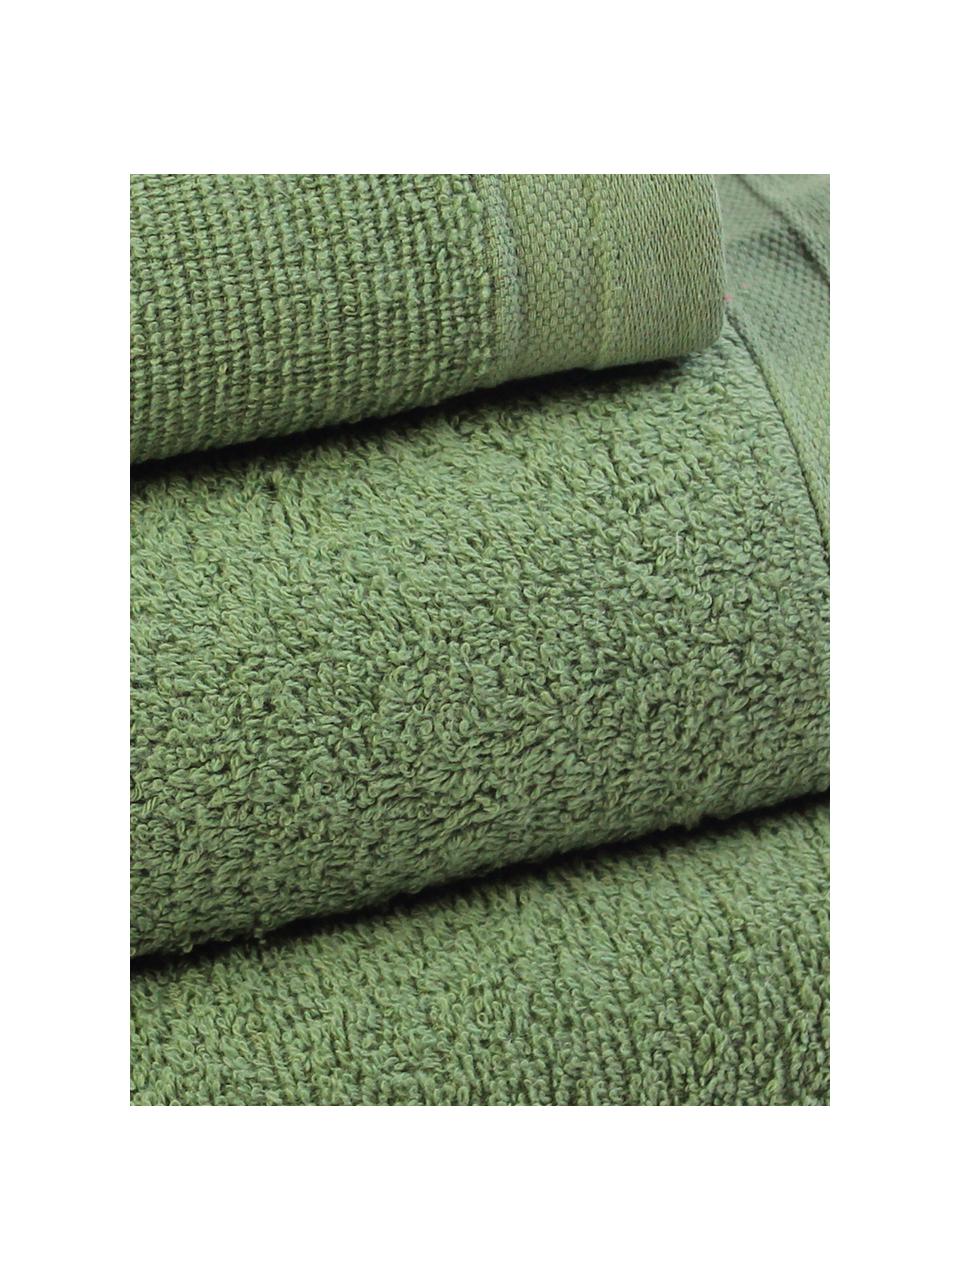 Set de toallas Noa, 3 pzas., 100% algodón
Gramaje superior 450 g/m², Verde militar, Tamaños diferentes